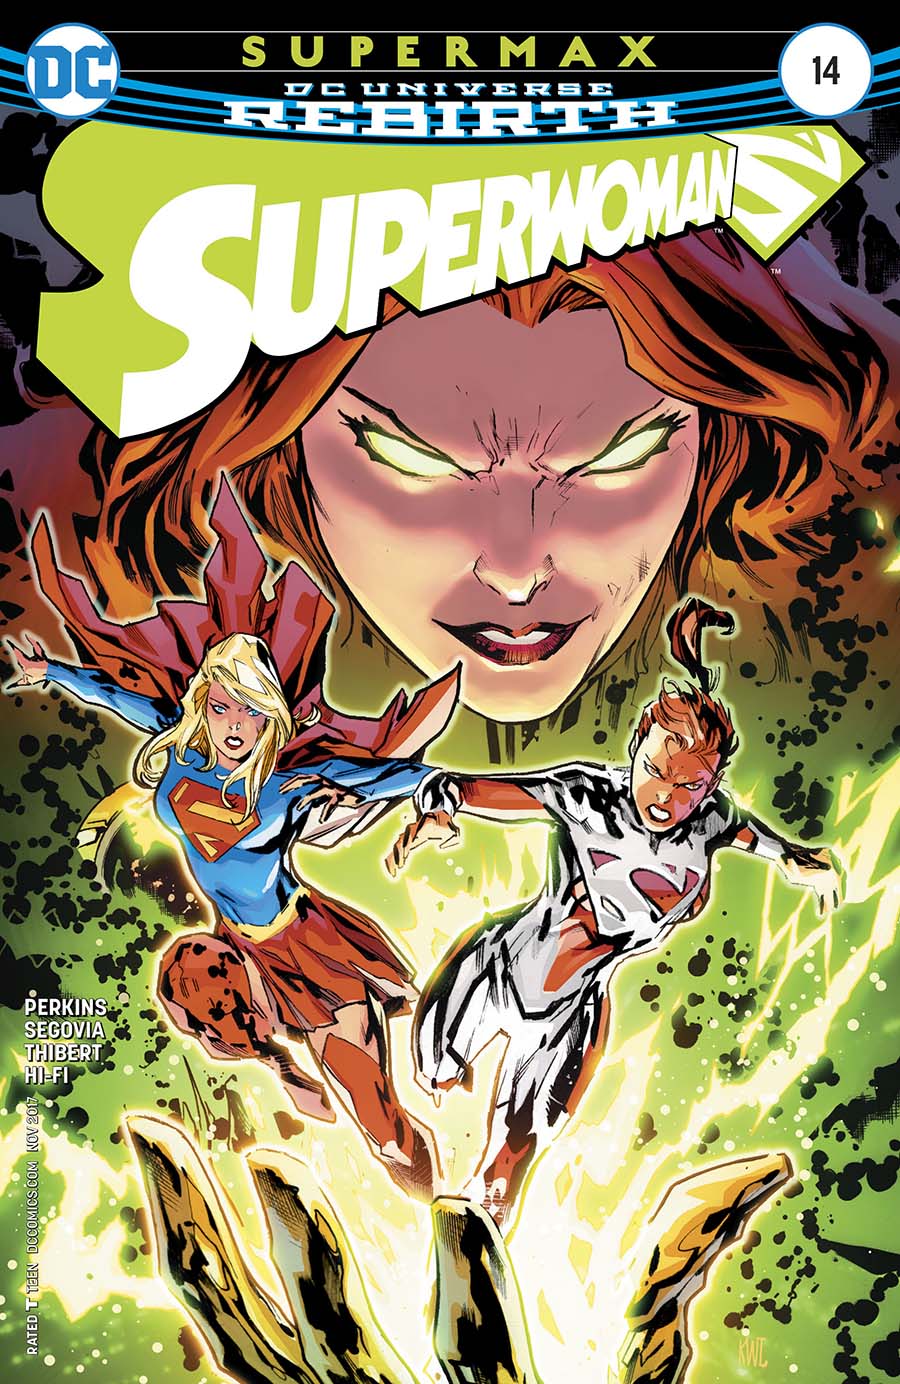 Superwoman #14